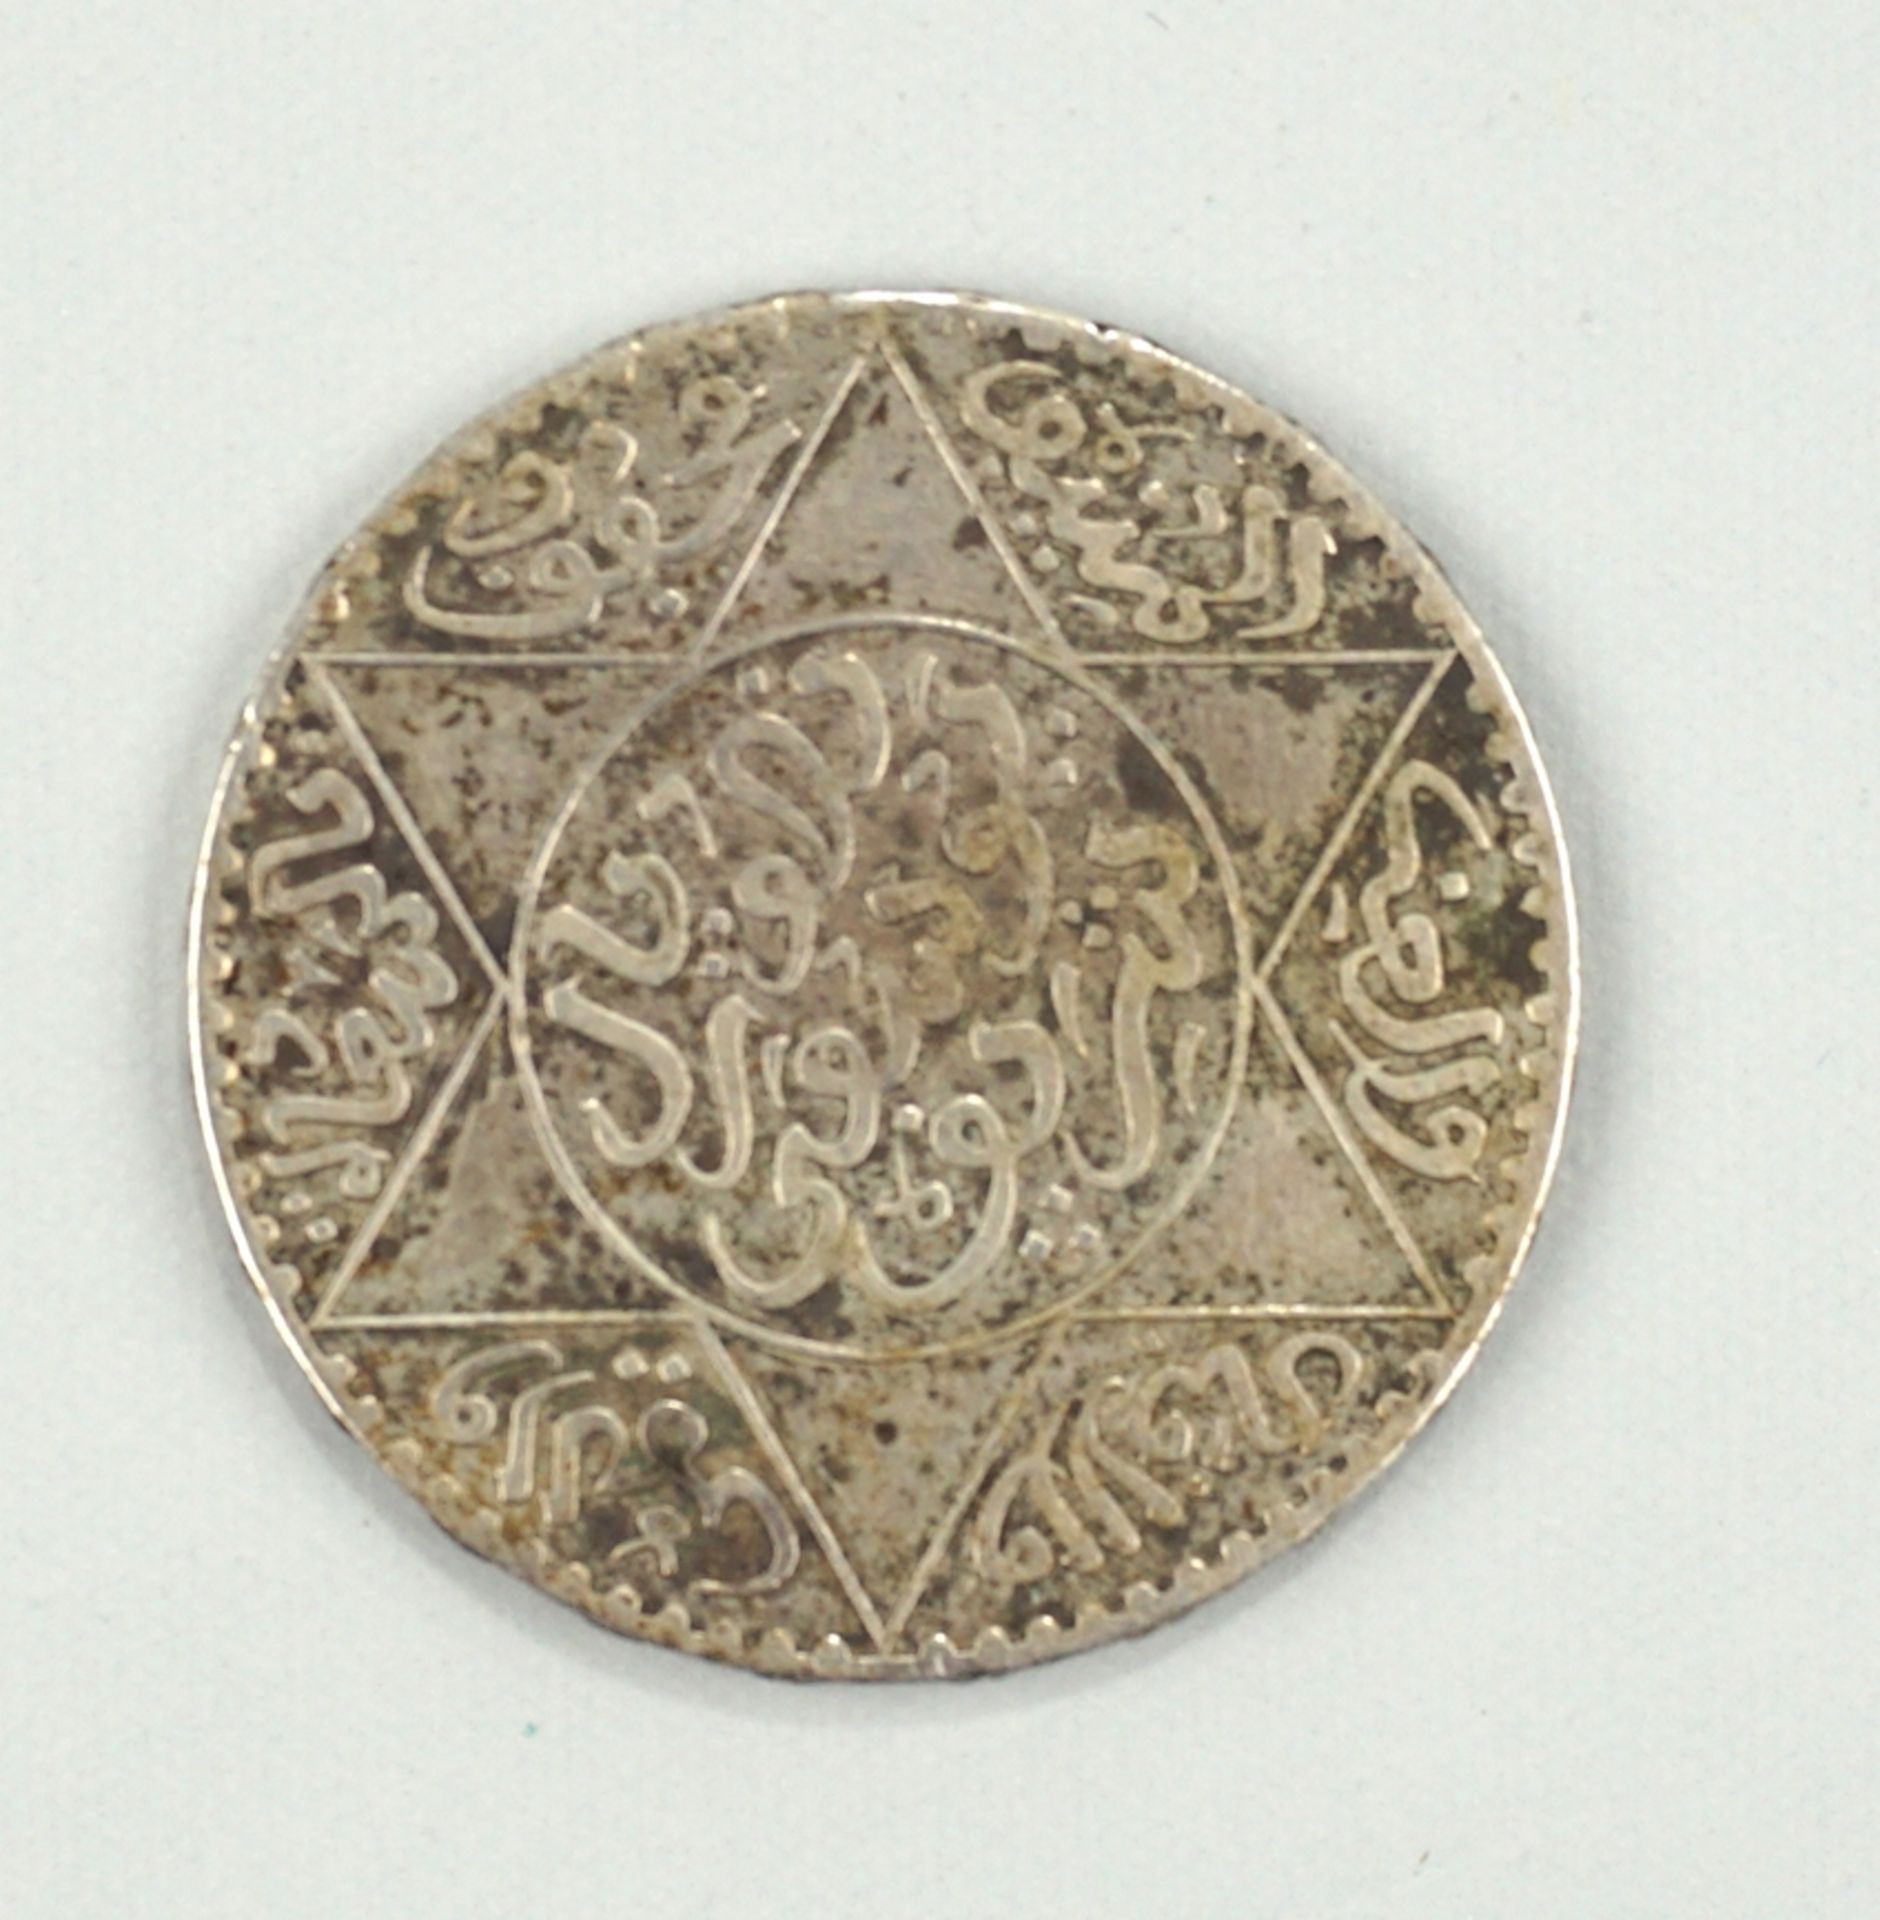 Marokko 5 Dirhams (1/2 Rial) 1917, Silber